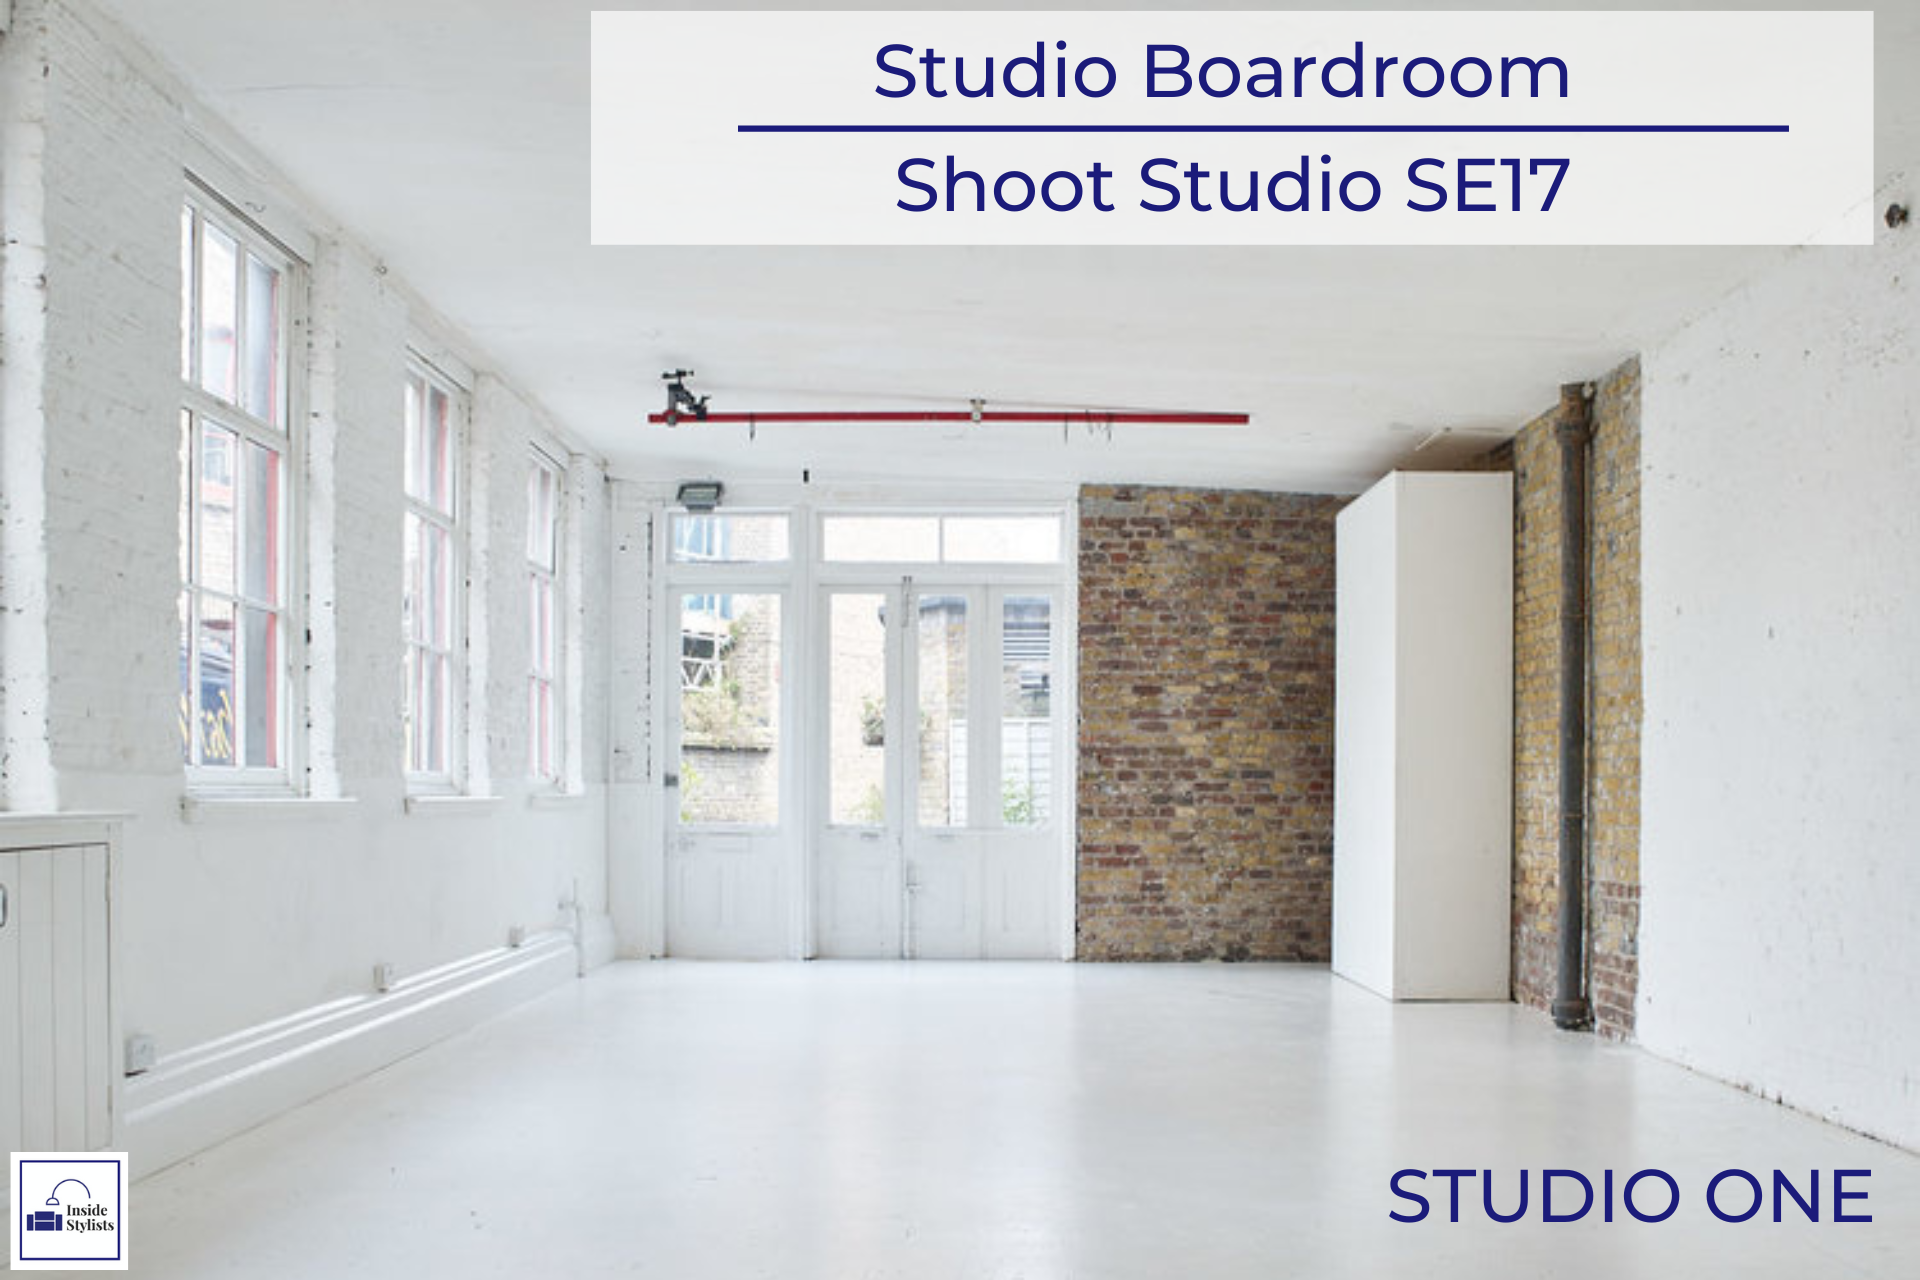 The boardroom shoot studio